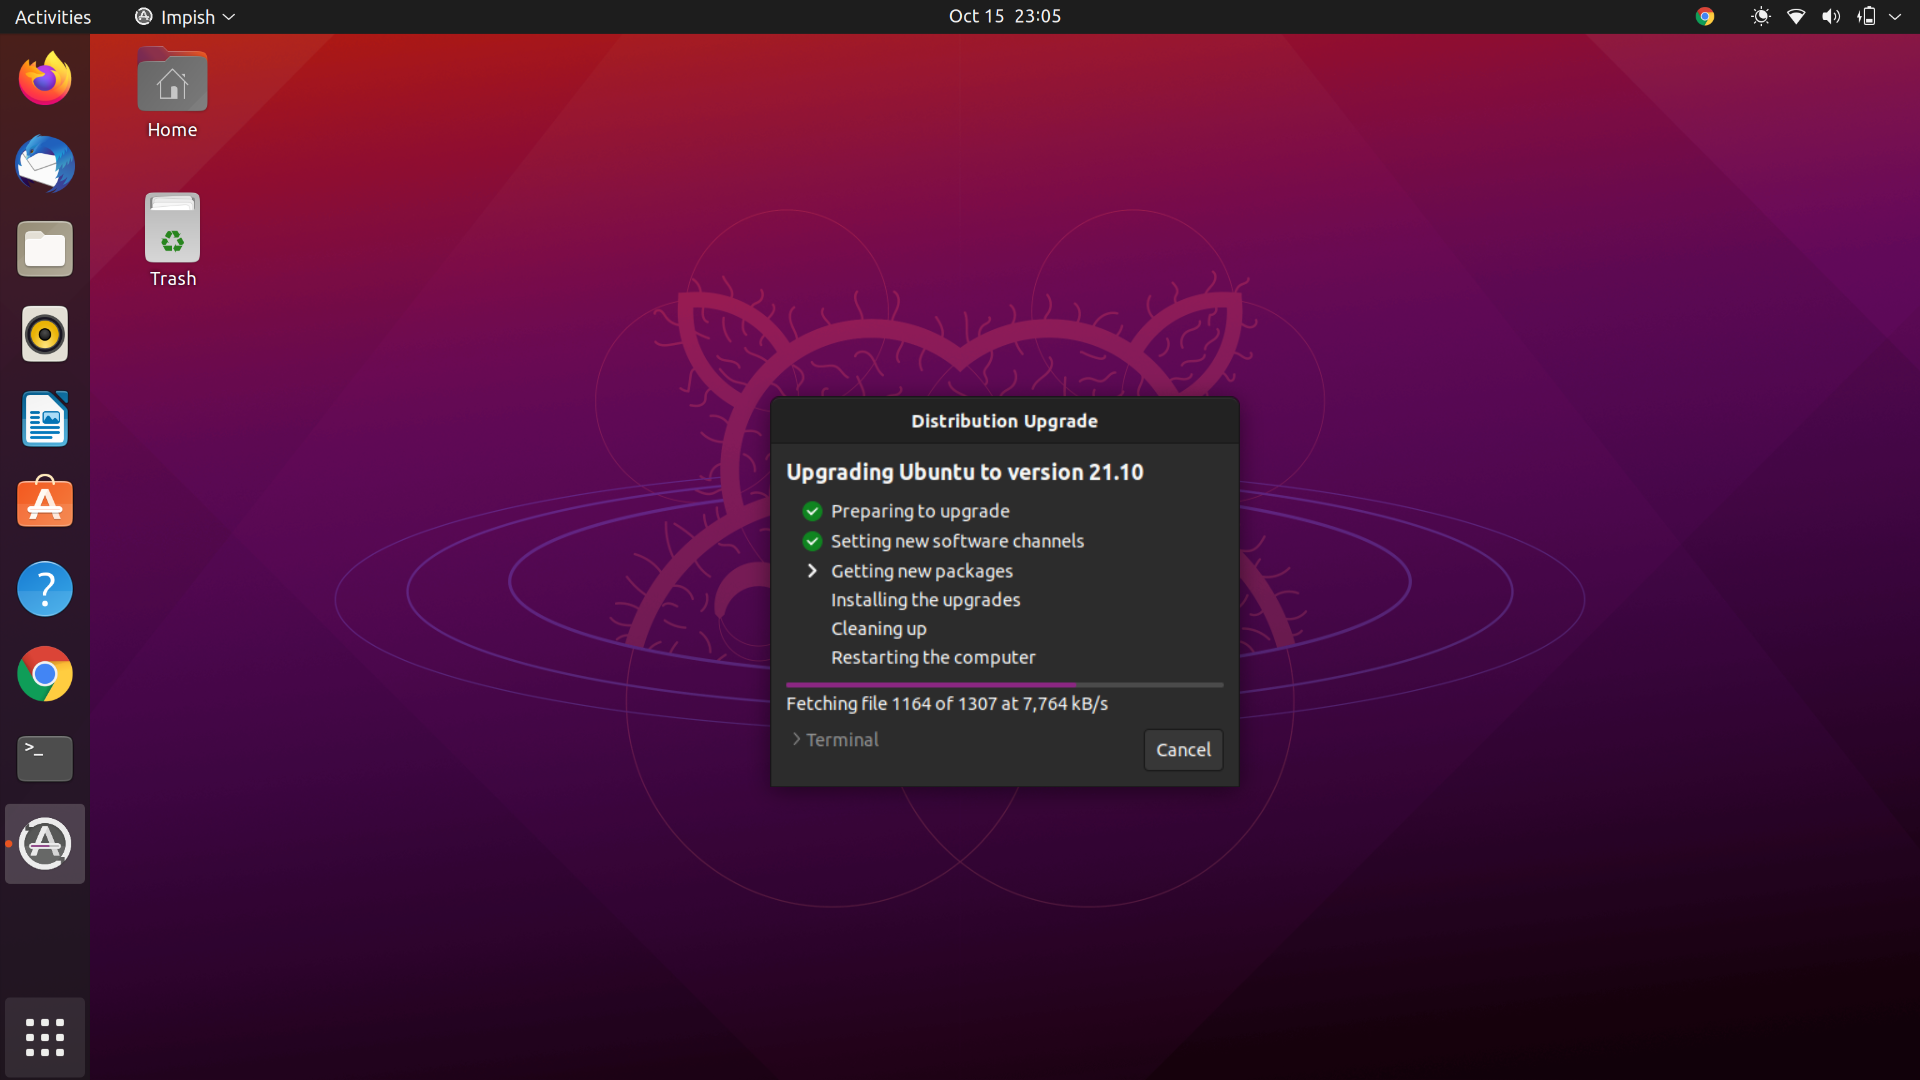 Ubuntu 21.10 Upgrade in progress